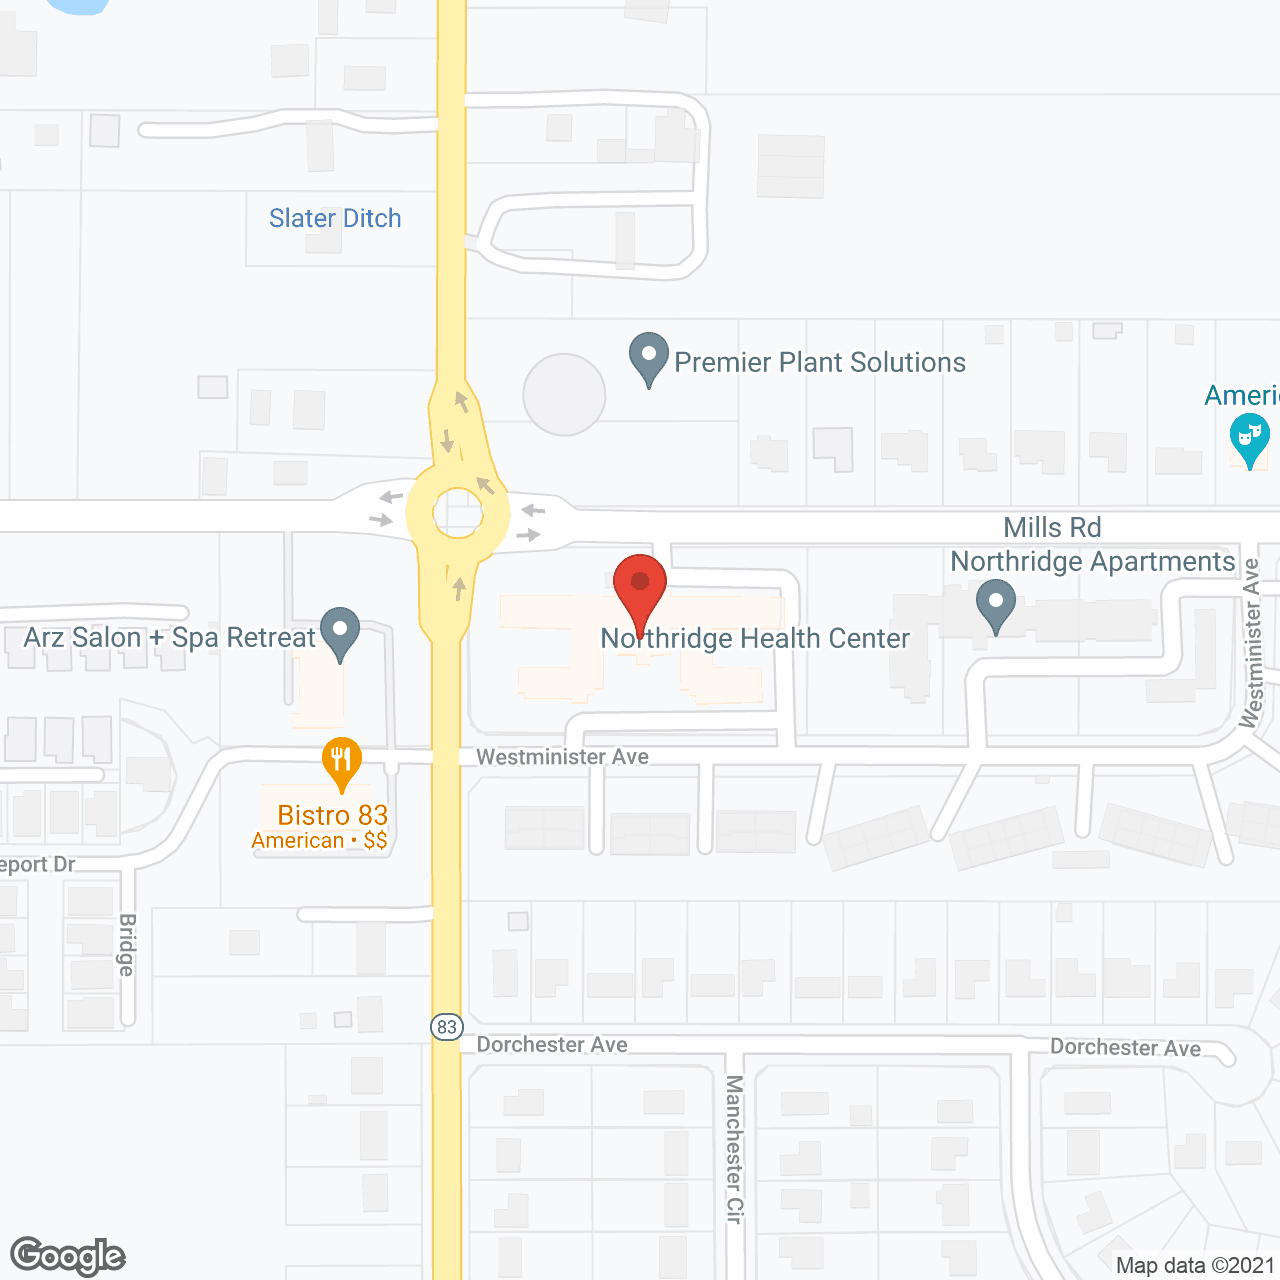 Northridge Health Center in google map